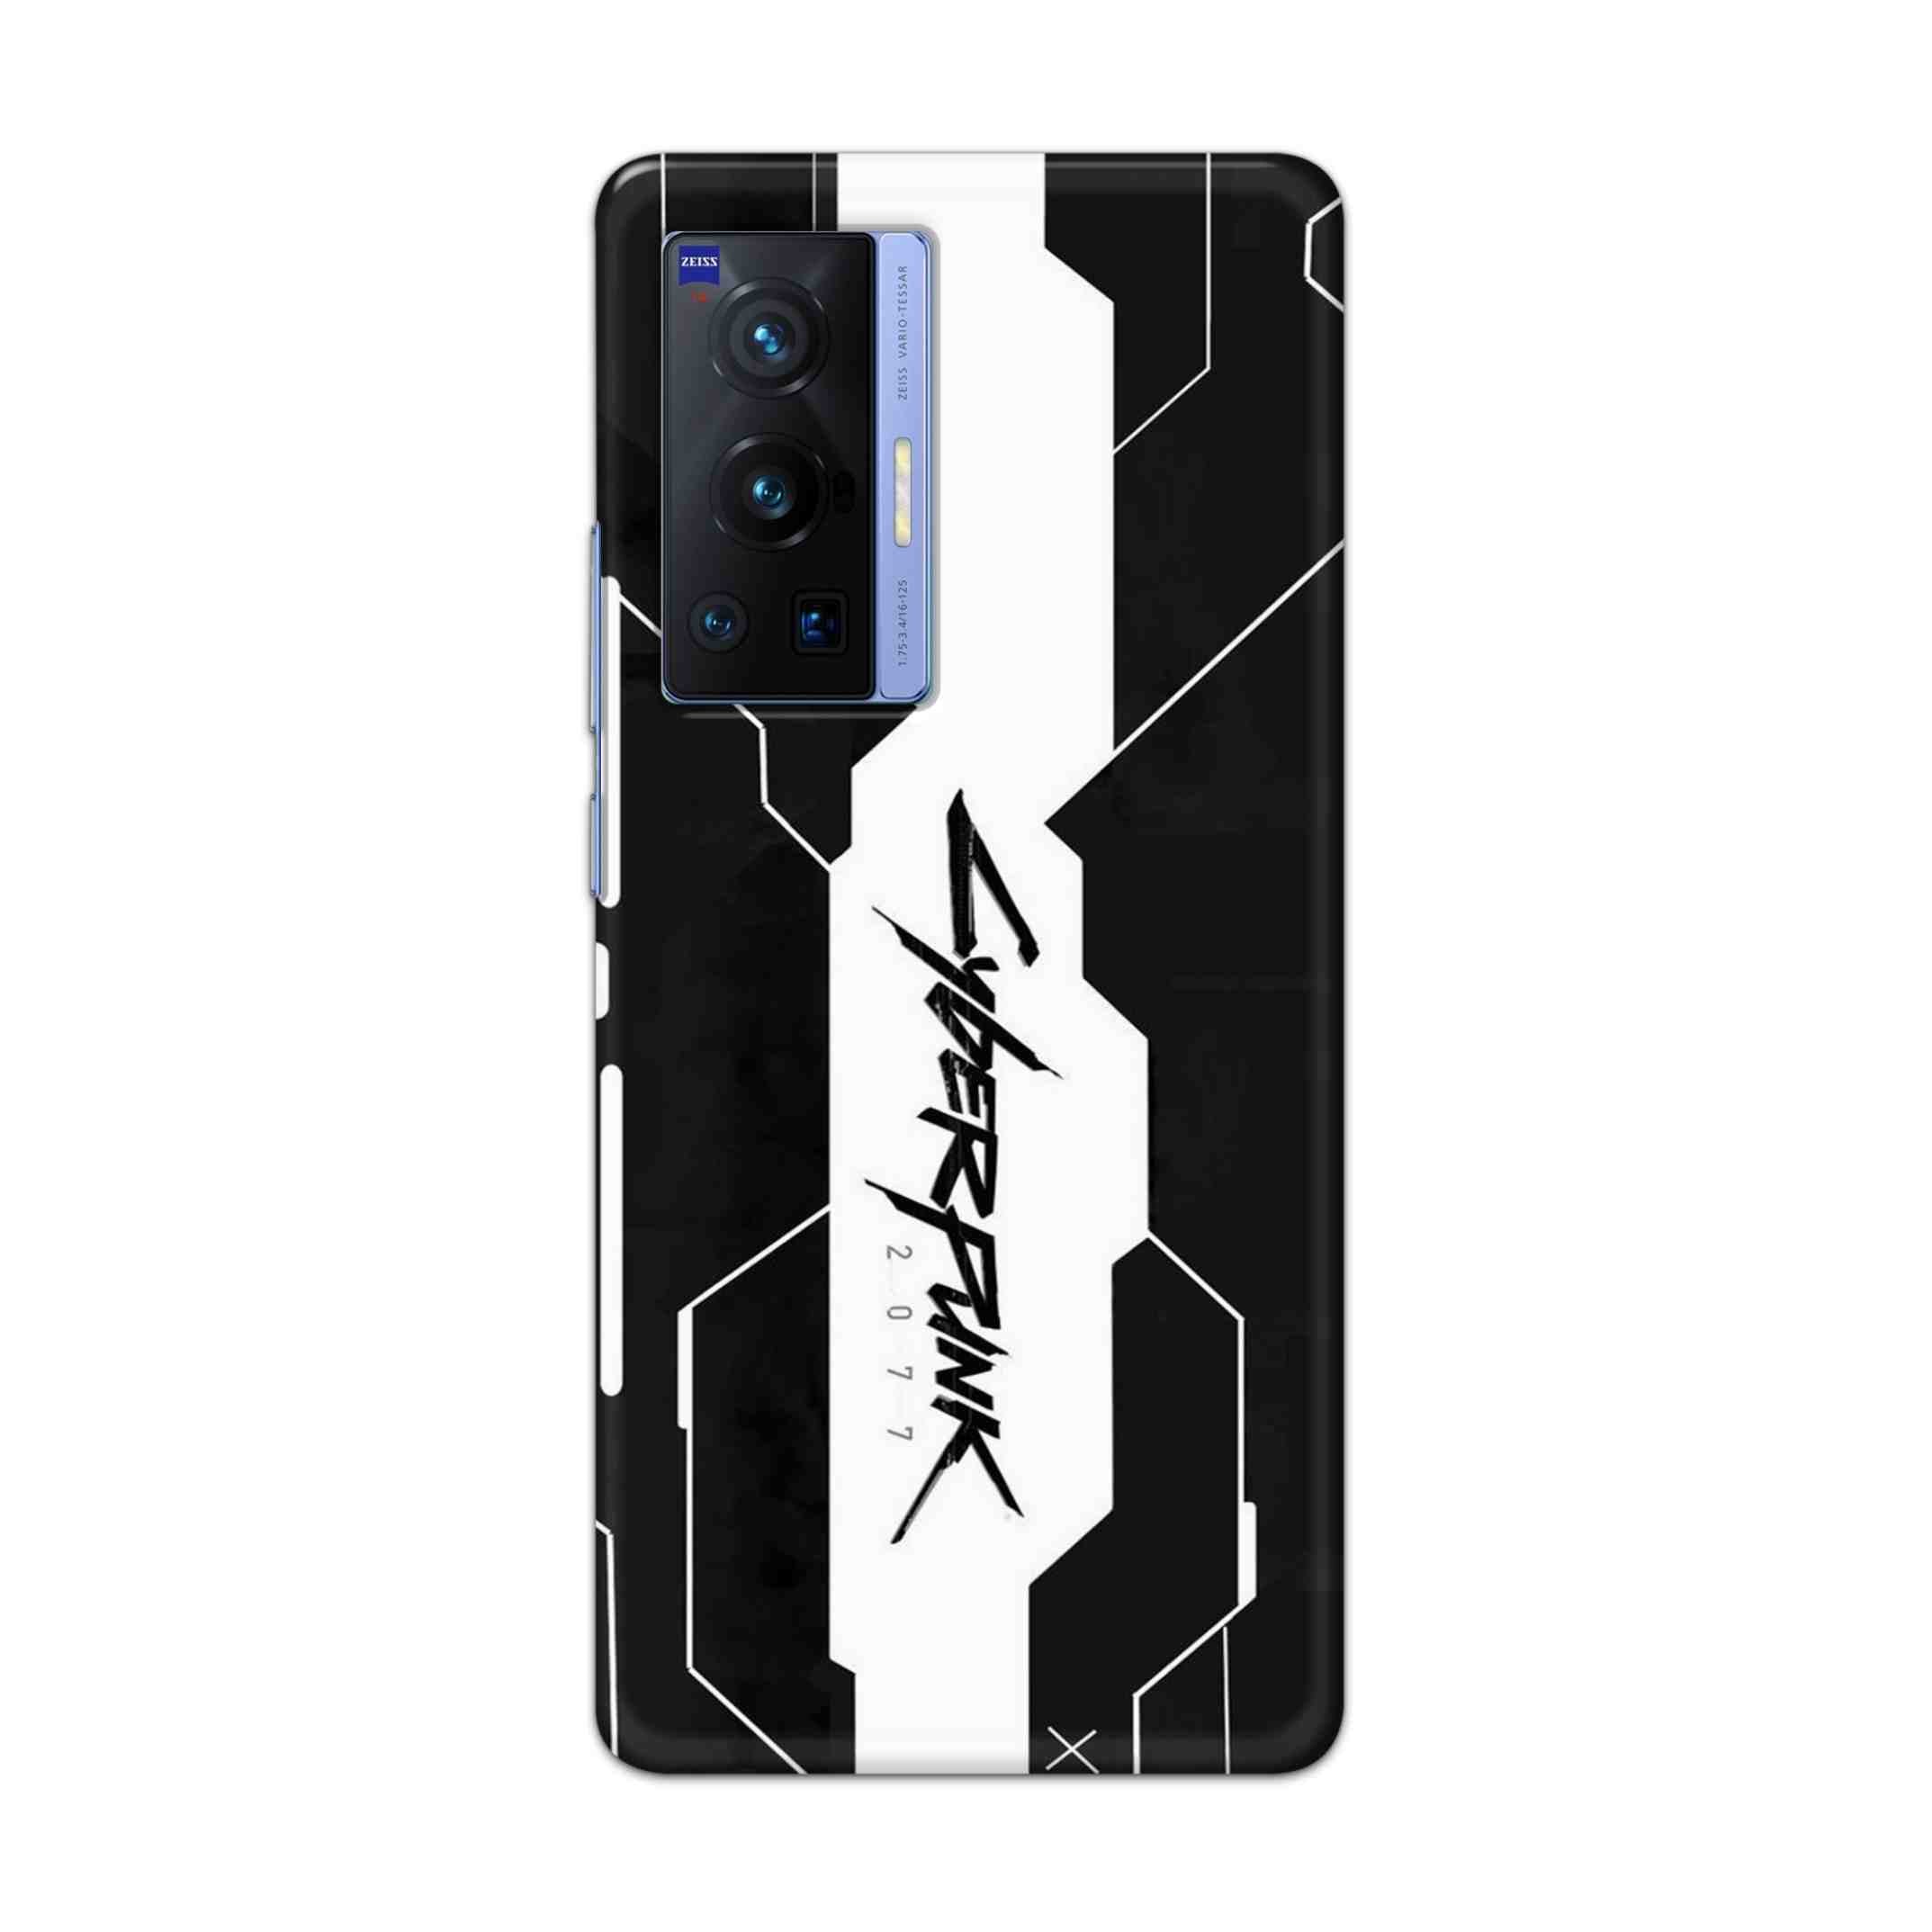 Buy Cyberpunk 2077 Art Hard Back Mobile Phone Case Cover For Vivo X70 Pro Online